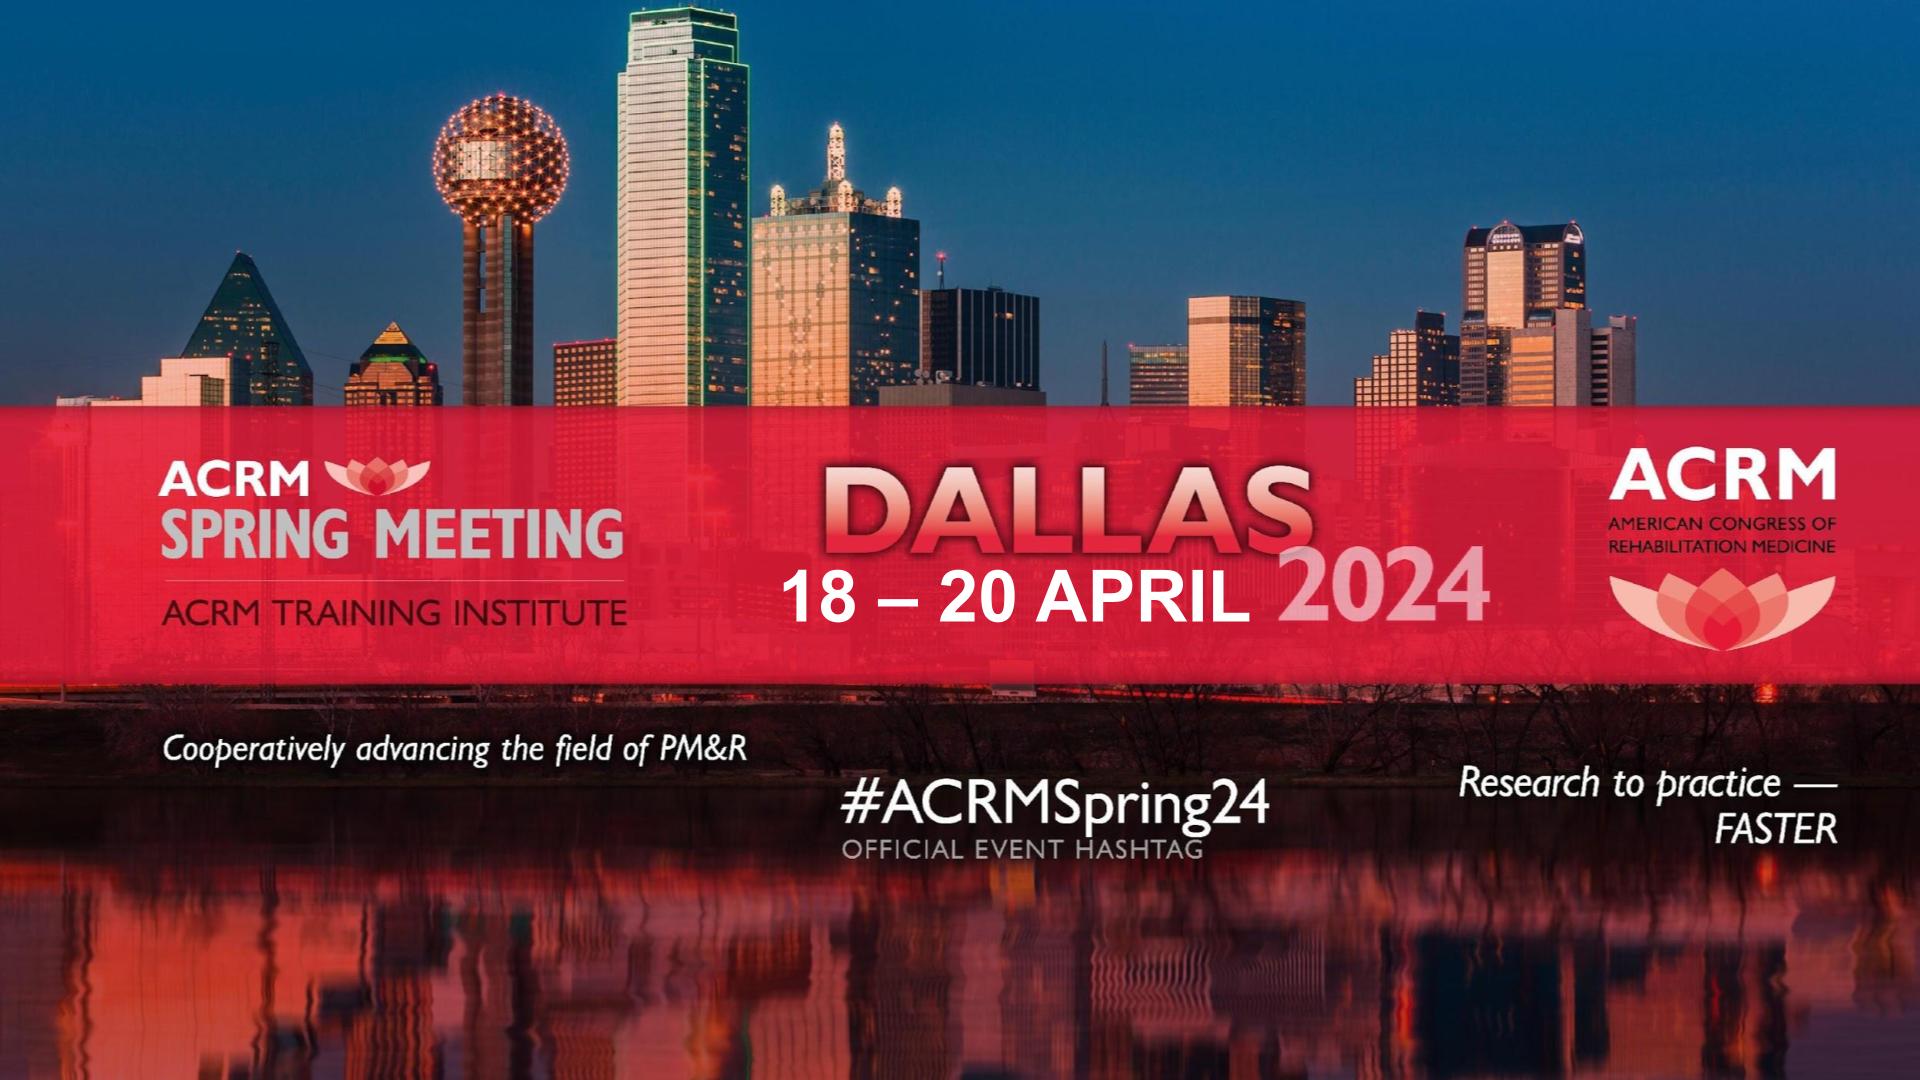 ACRM Spring Meeting 2024